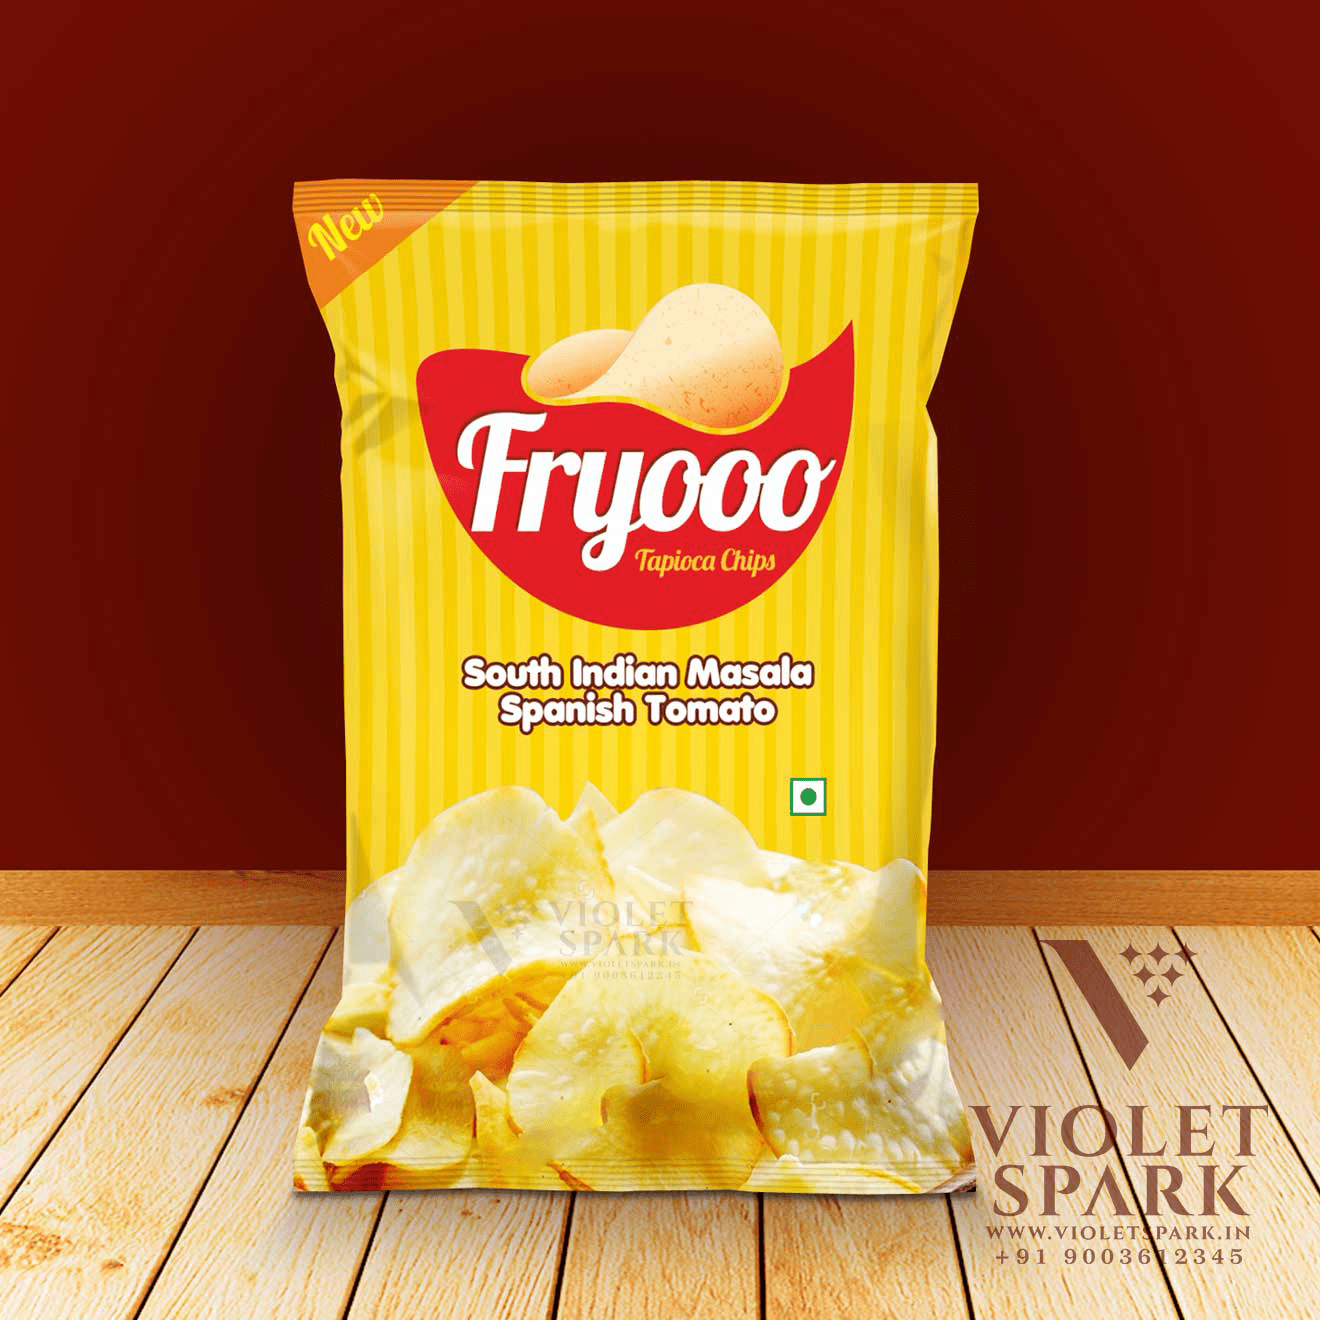 Fryooo Chips Branding & Packaging Design in Erode by Creative Prints thecreativeprints